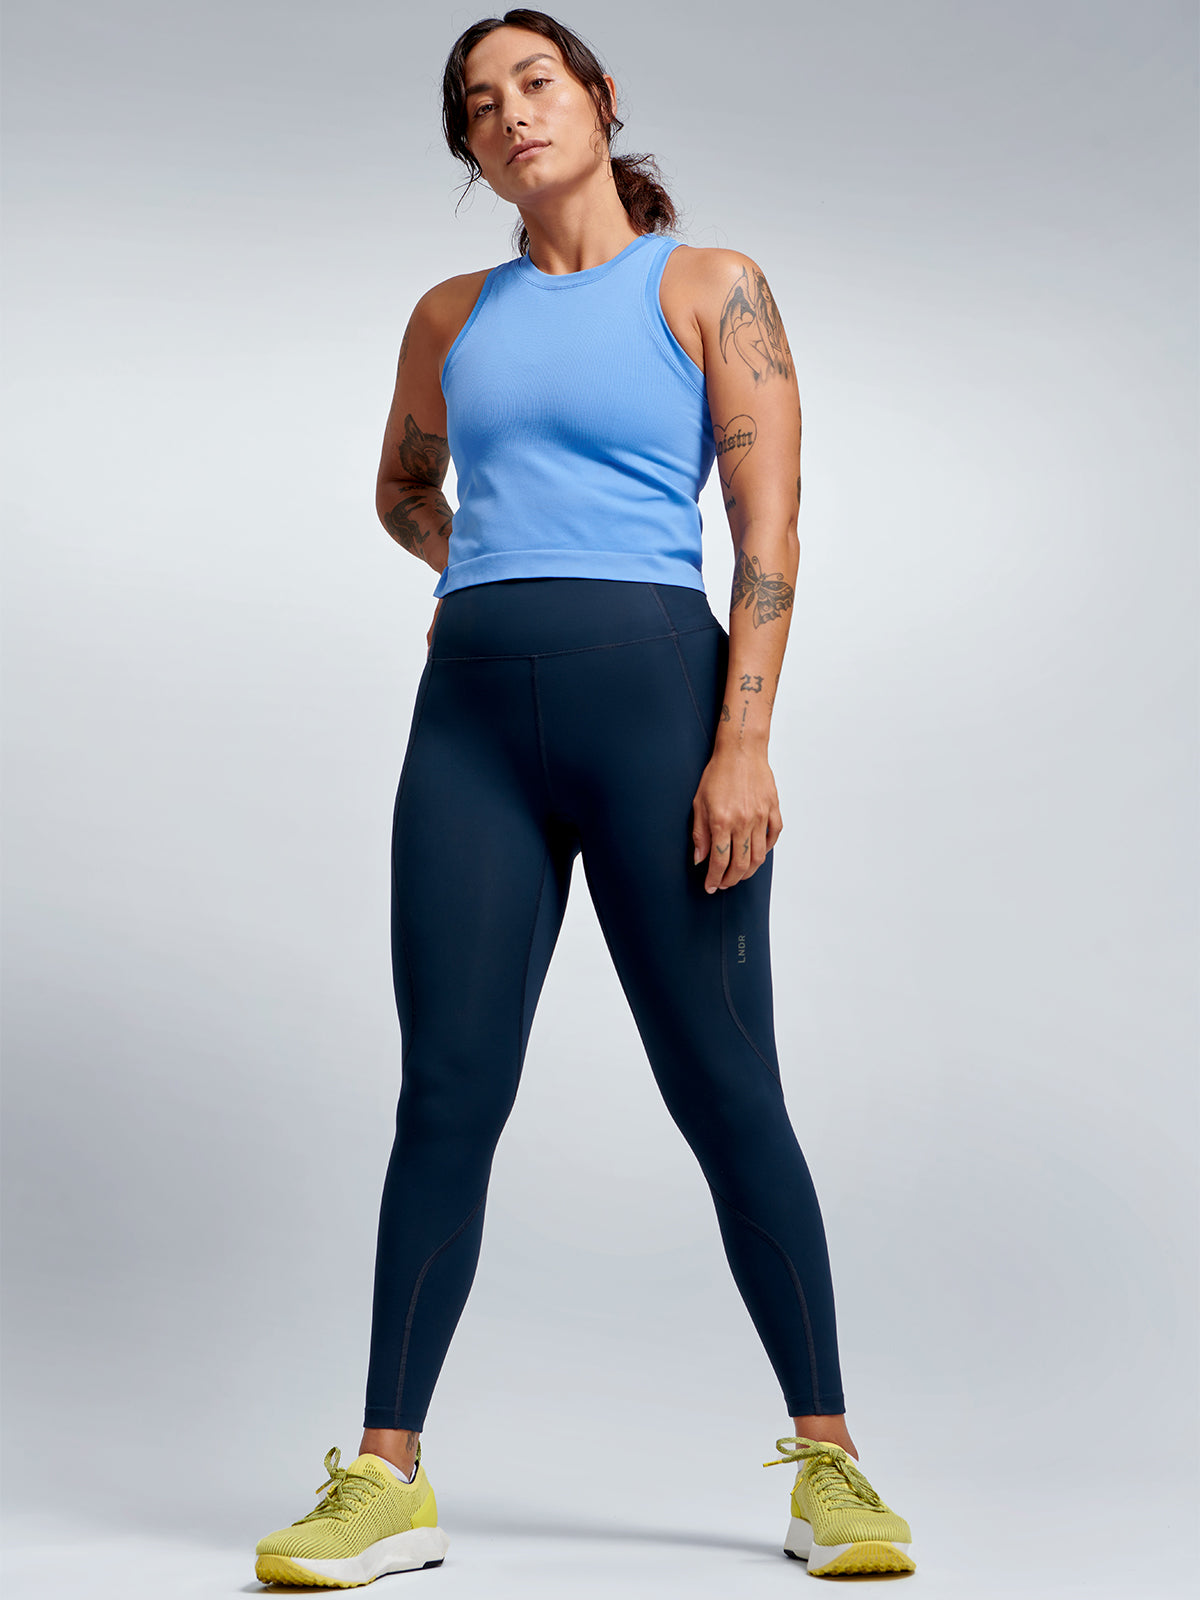 Power Cropped Workout Leggings - Navy Blue, Women's Leggings